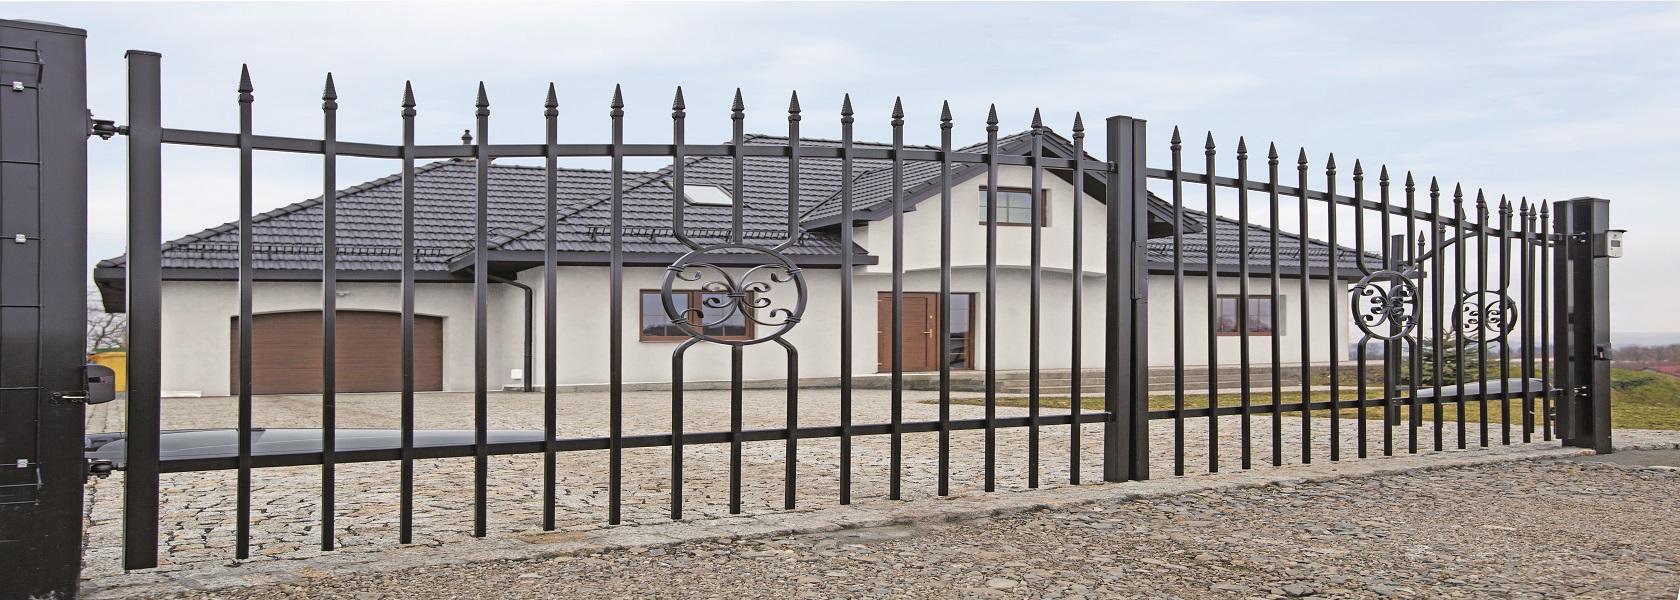 Property fences: Wiśniowski BASIC AW.10.94 IV